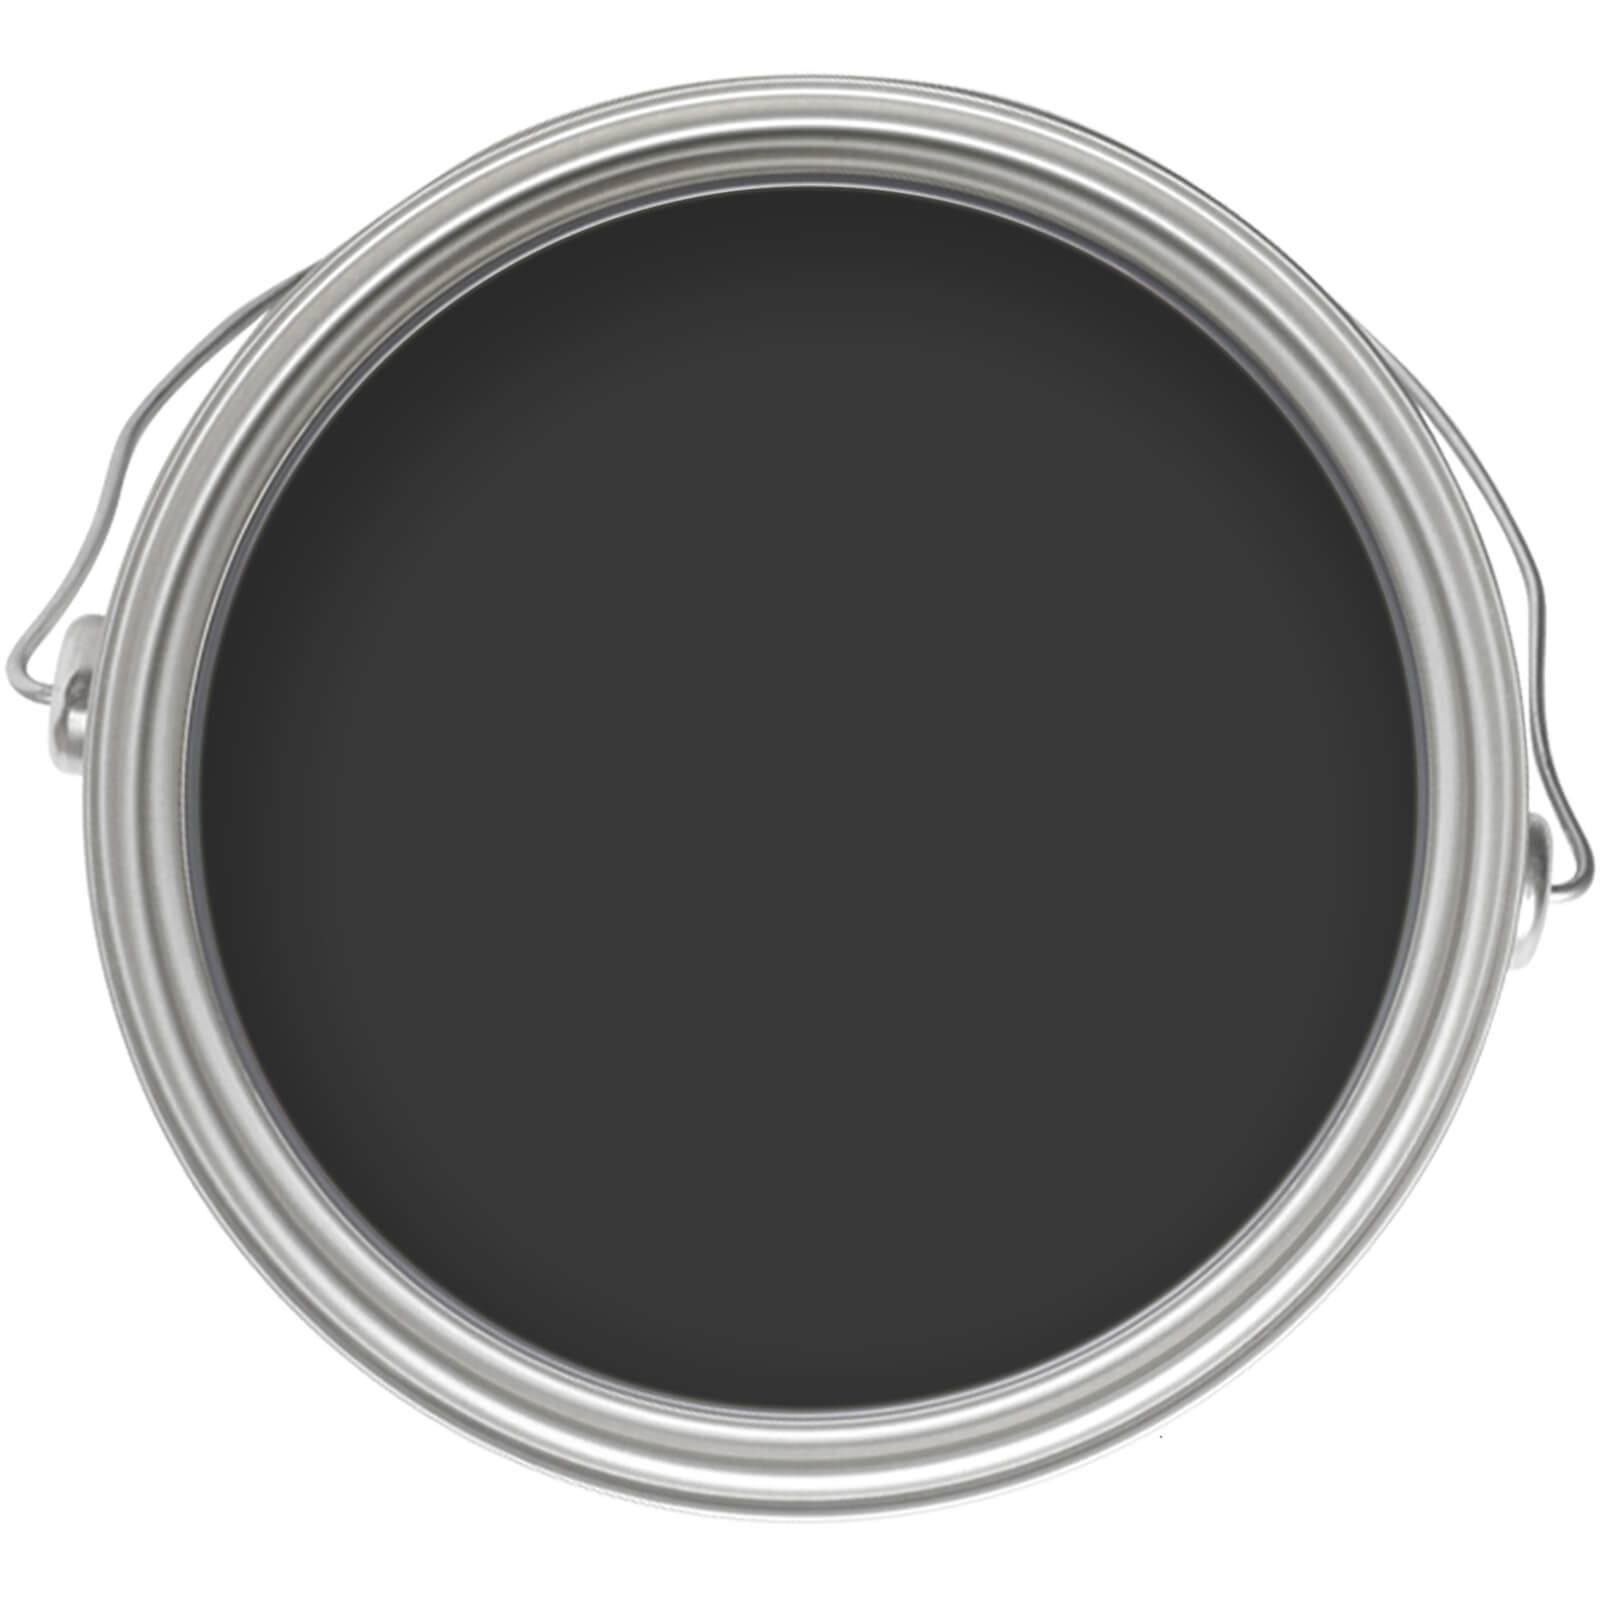 Homebase Smooth Masonry Colour Paint Tester - Black 250ml